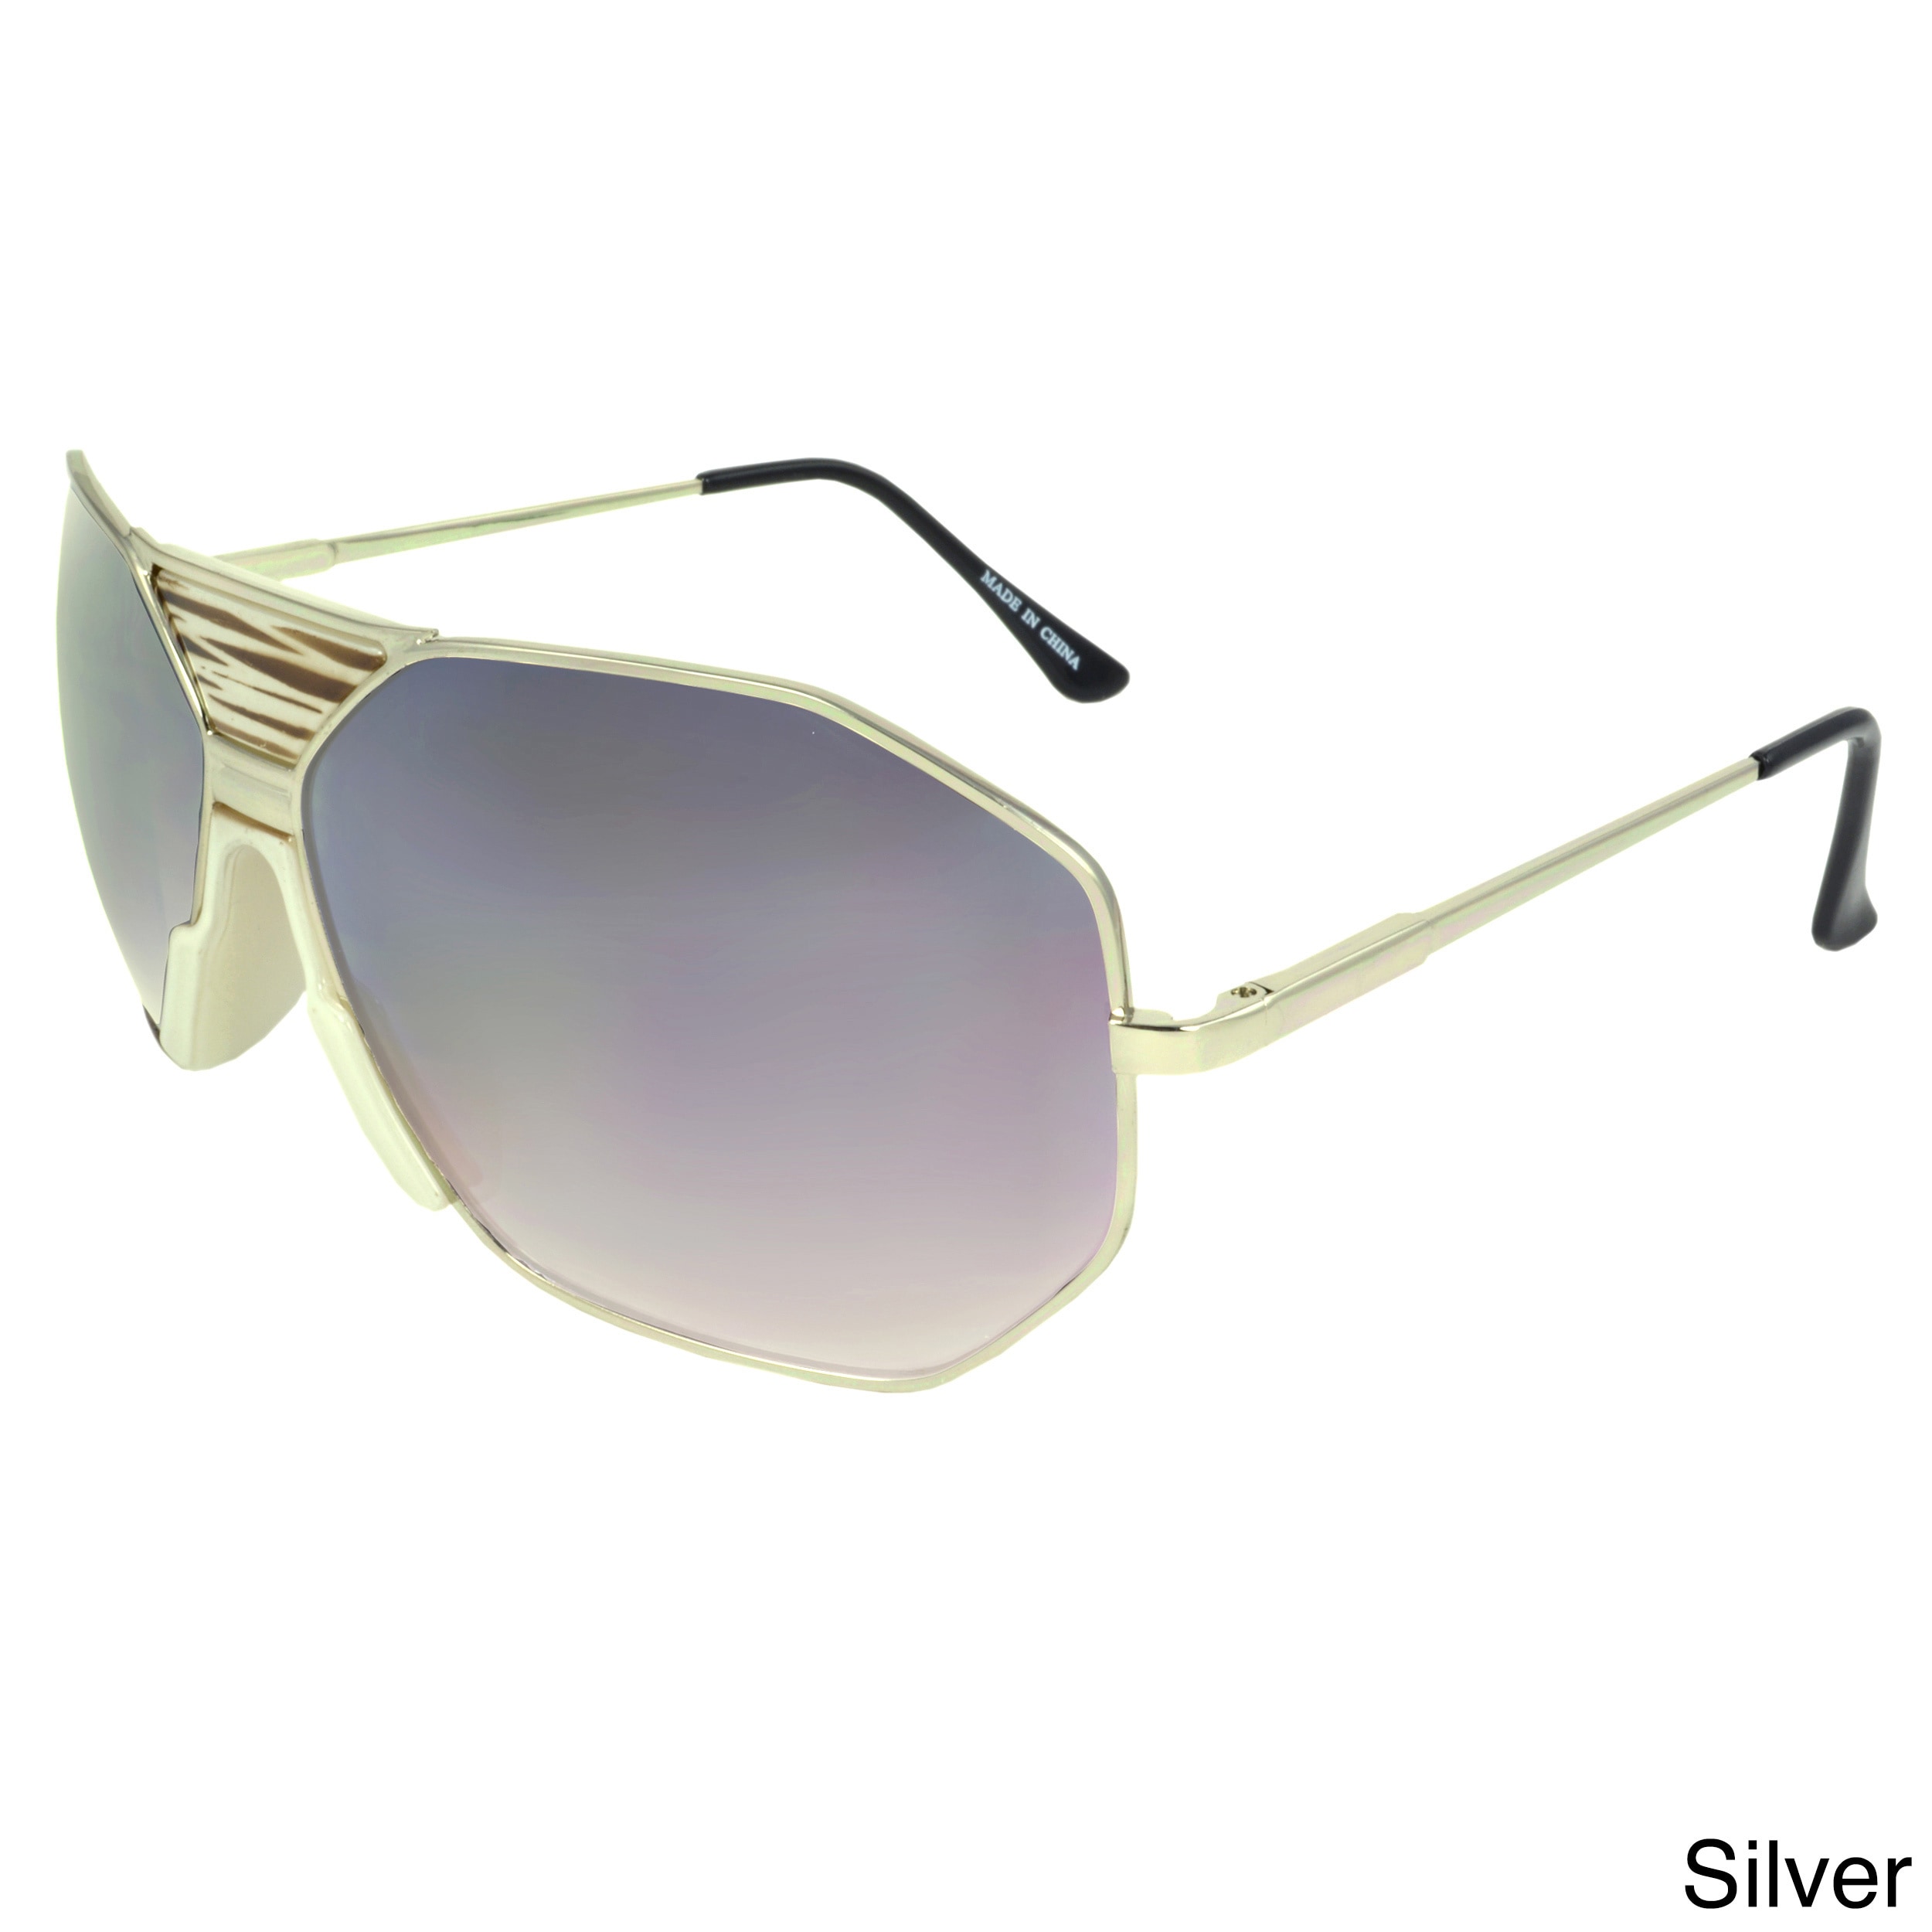 Apopo Eyewear Helma Shield Fashion Sunglasses